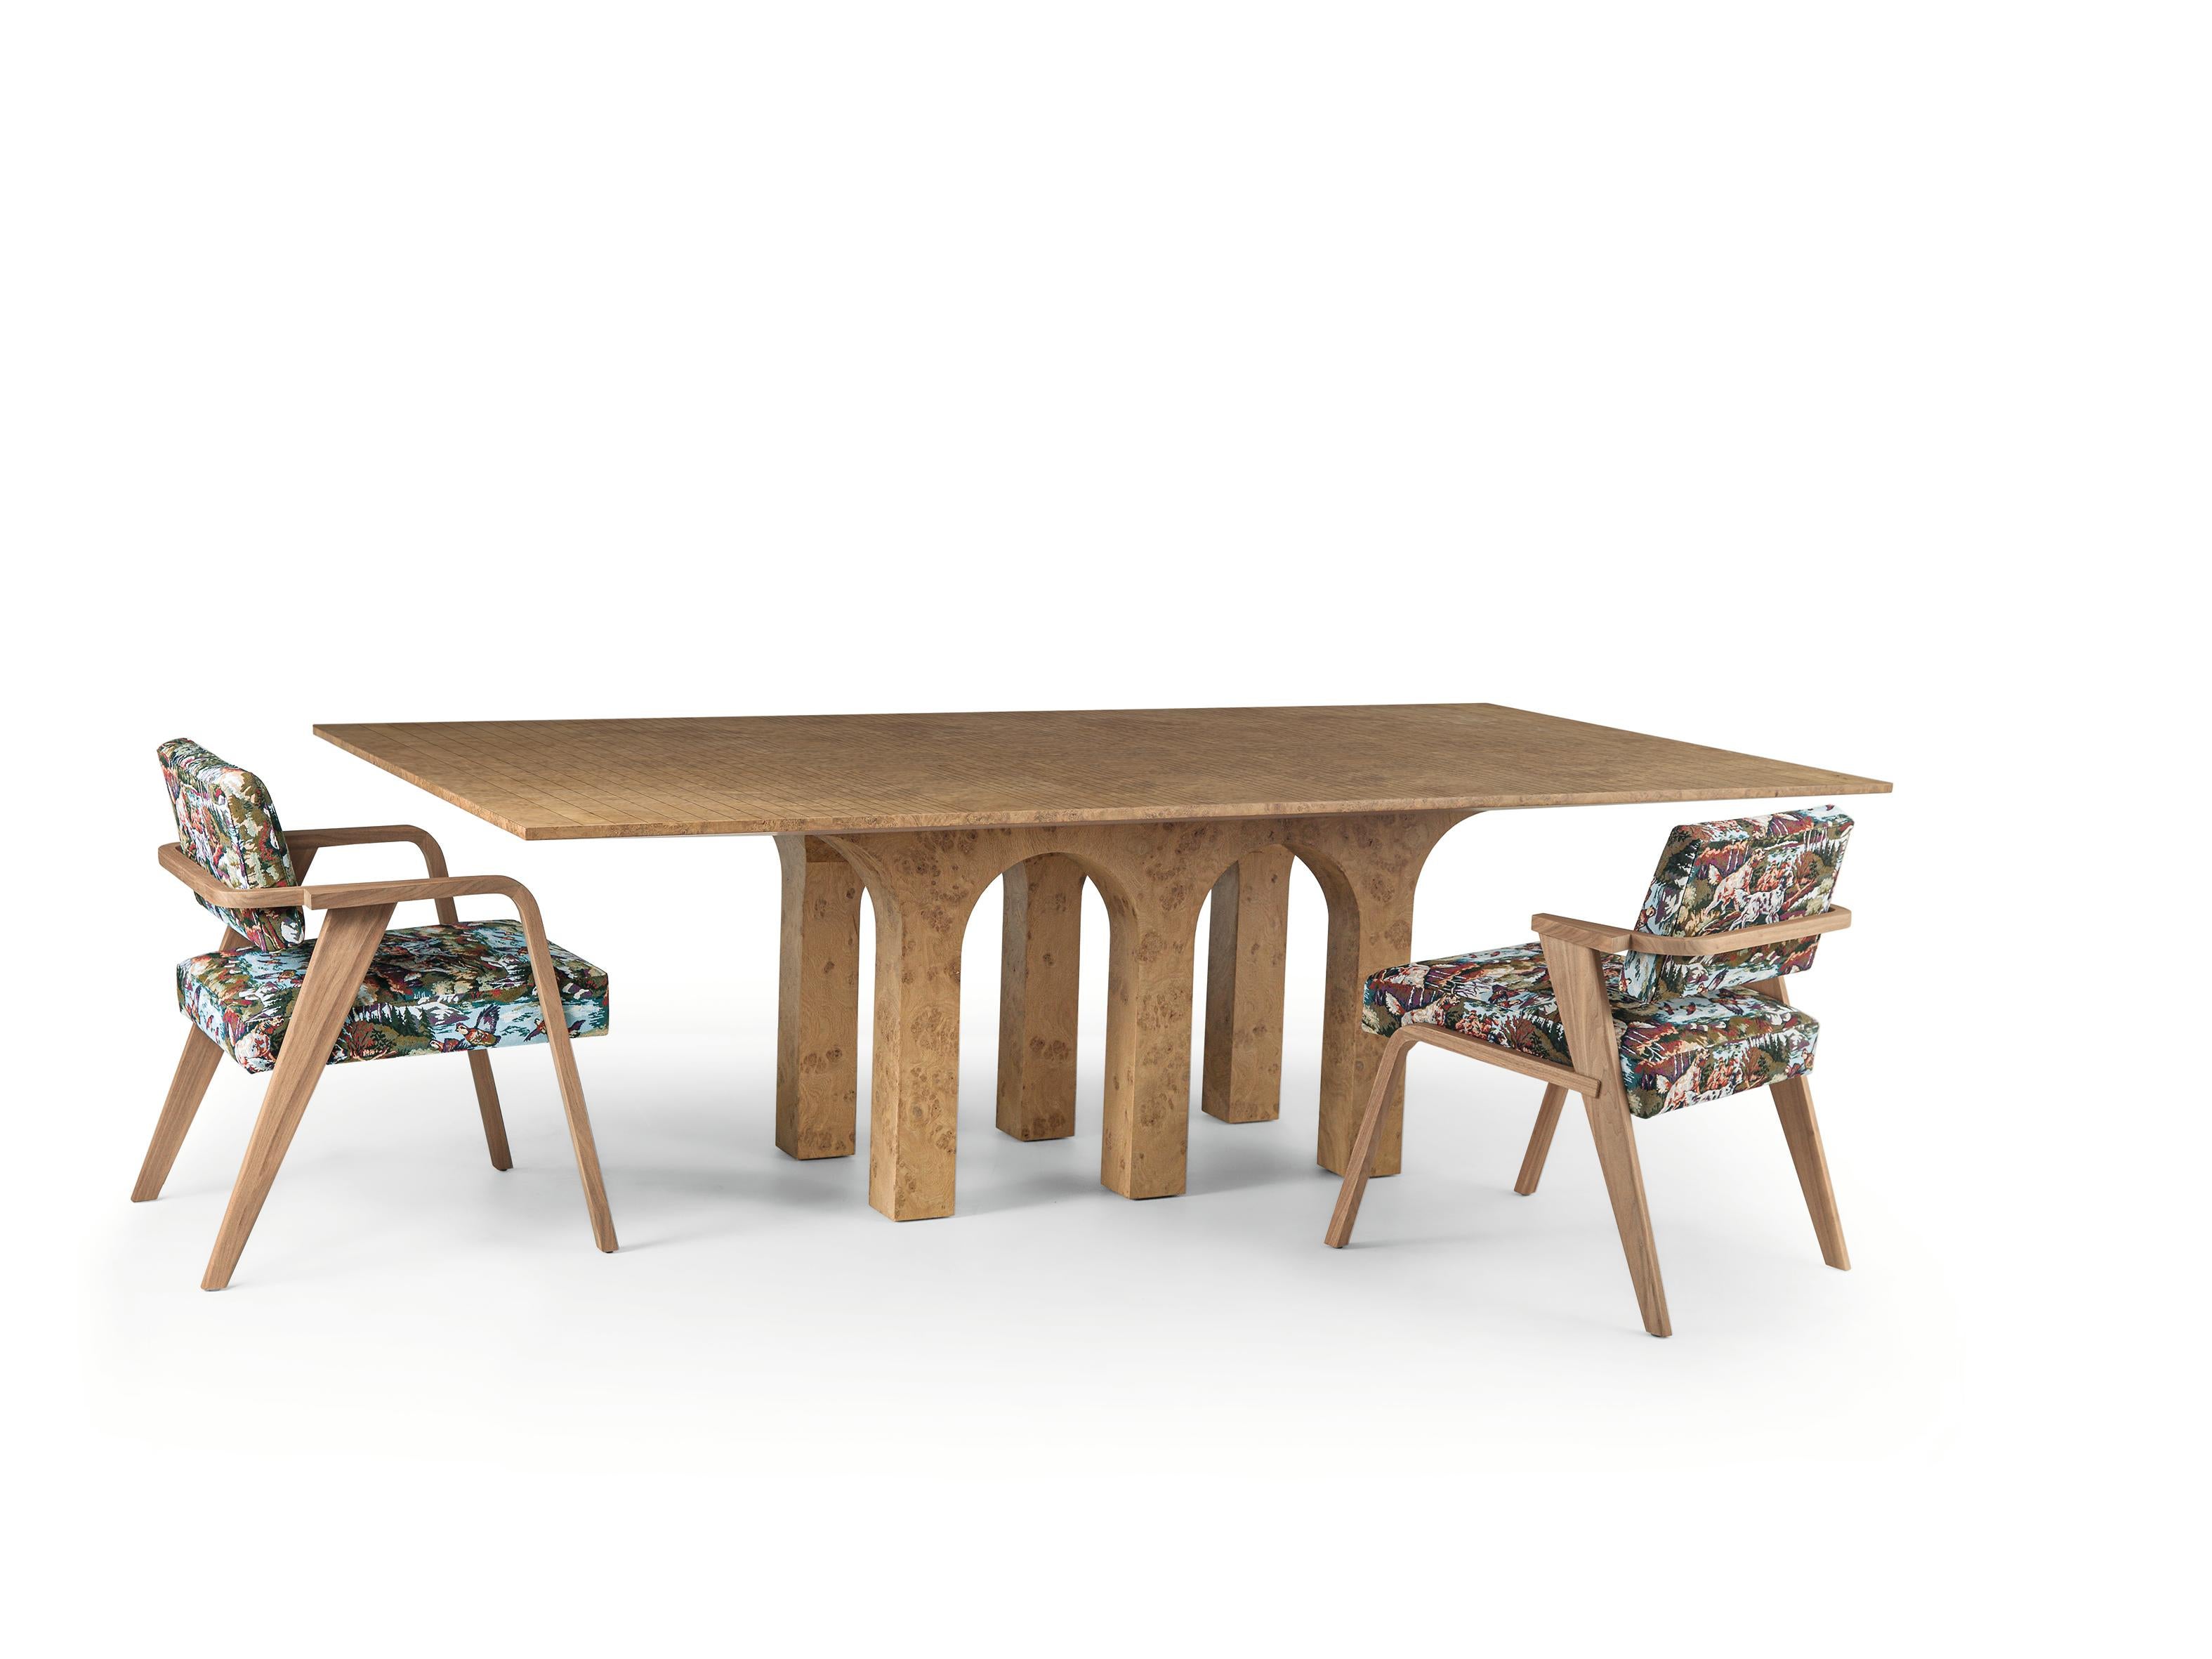 ARCHI Dining Table in Oak Burl and Ebony Inlays - Arches Shaped Legs In New Condition For Sale In Lentate sul Seveso, Monza e Brianza